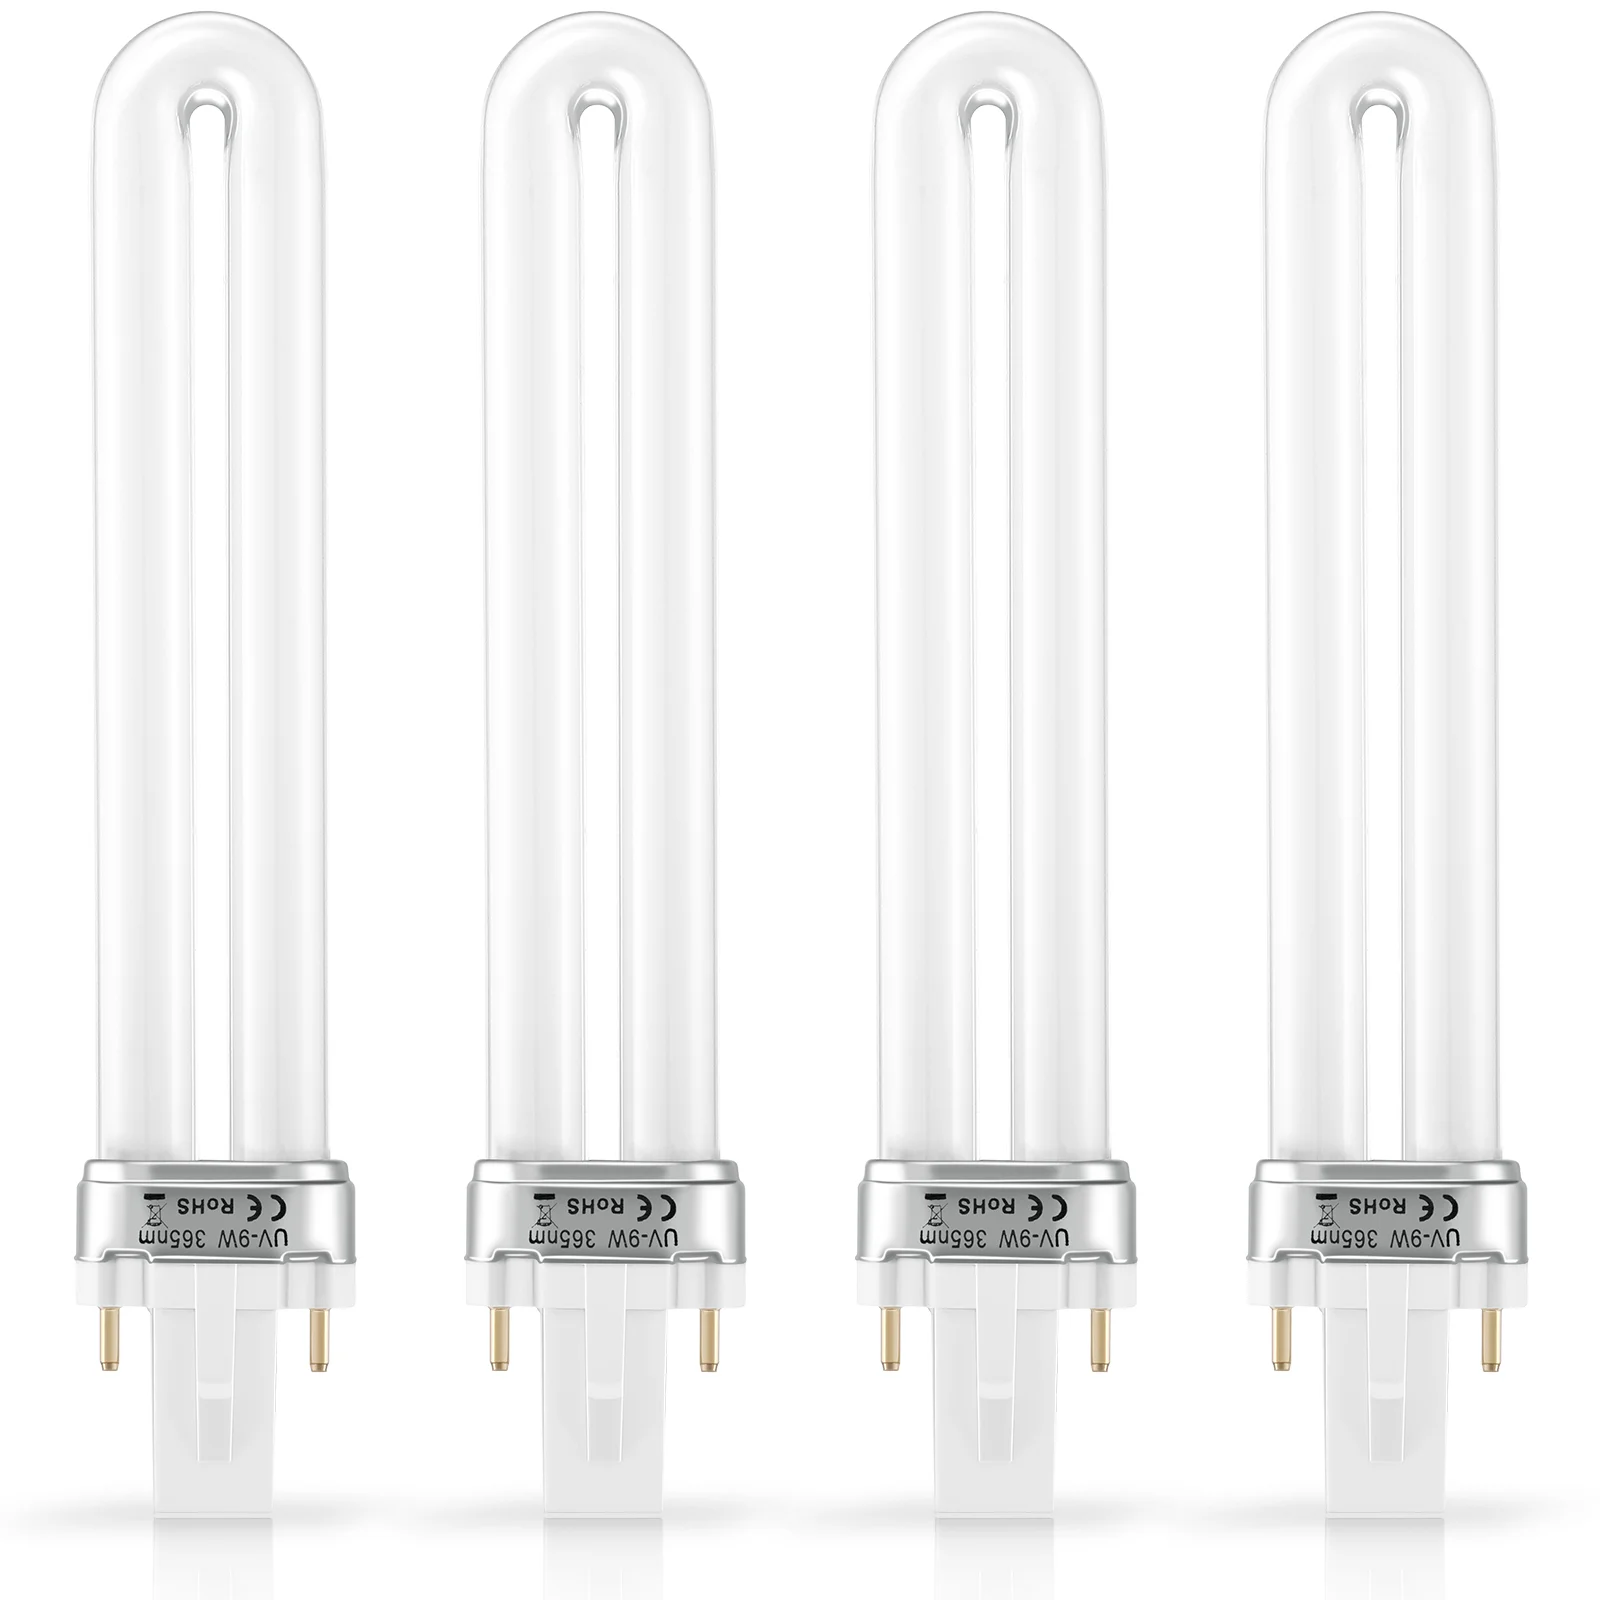 

4 Pcs UV Nail Dryer Light Bulb Replacement Tube Track Bulbs LED Nails 9W U-shaped 365nm Accessories